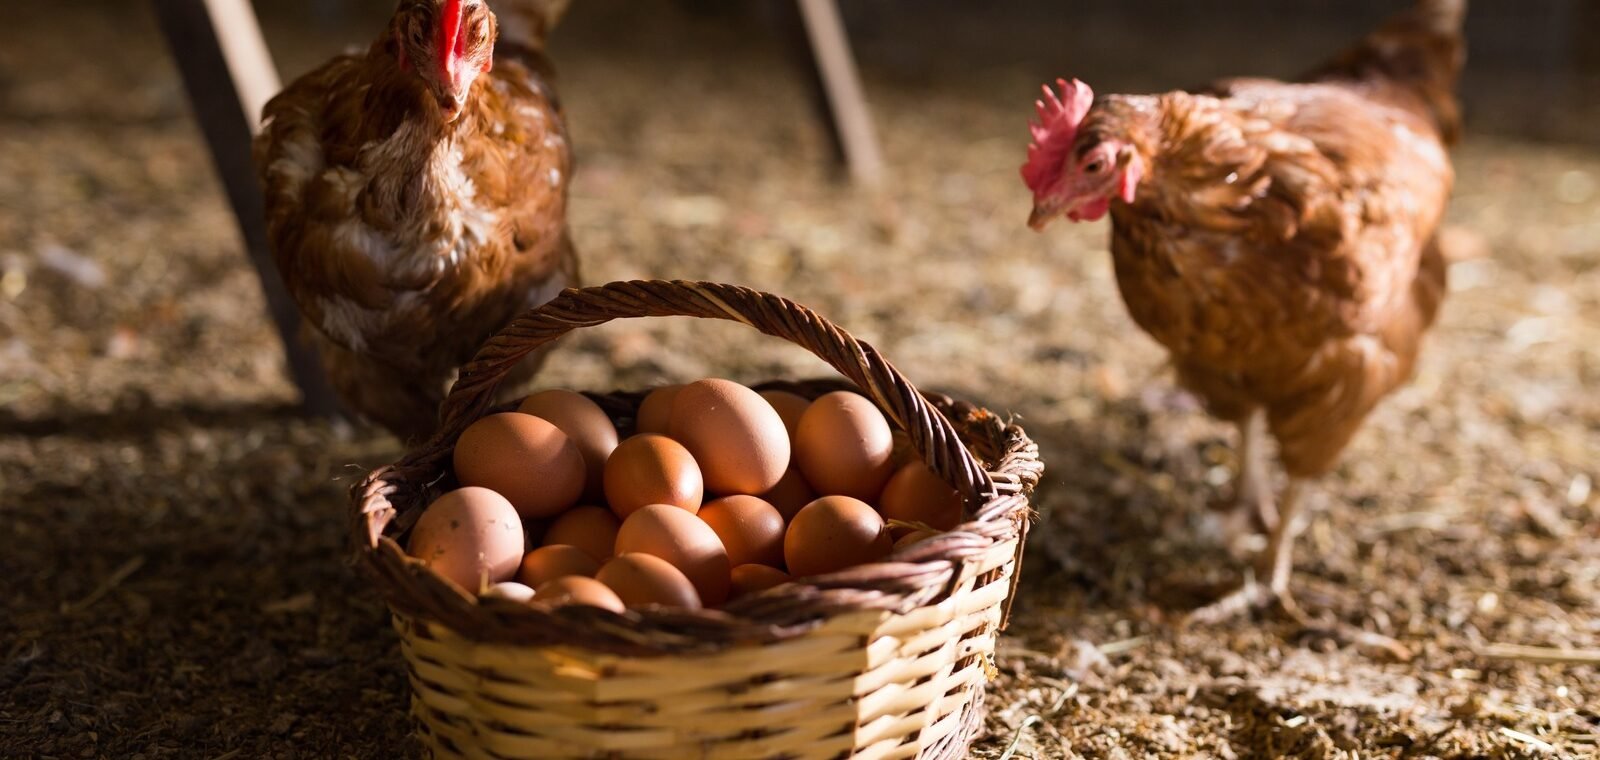 Pasture-Raised Eggs vs. Commercial Eggs